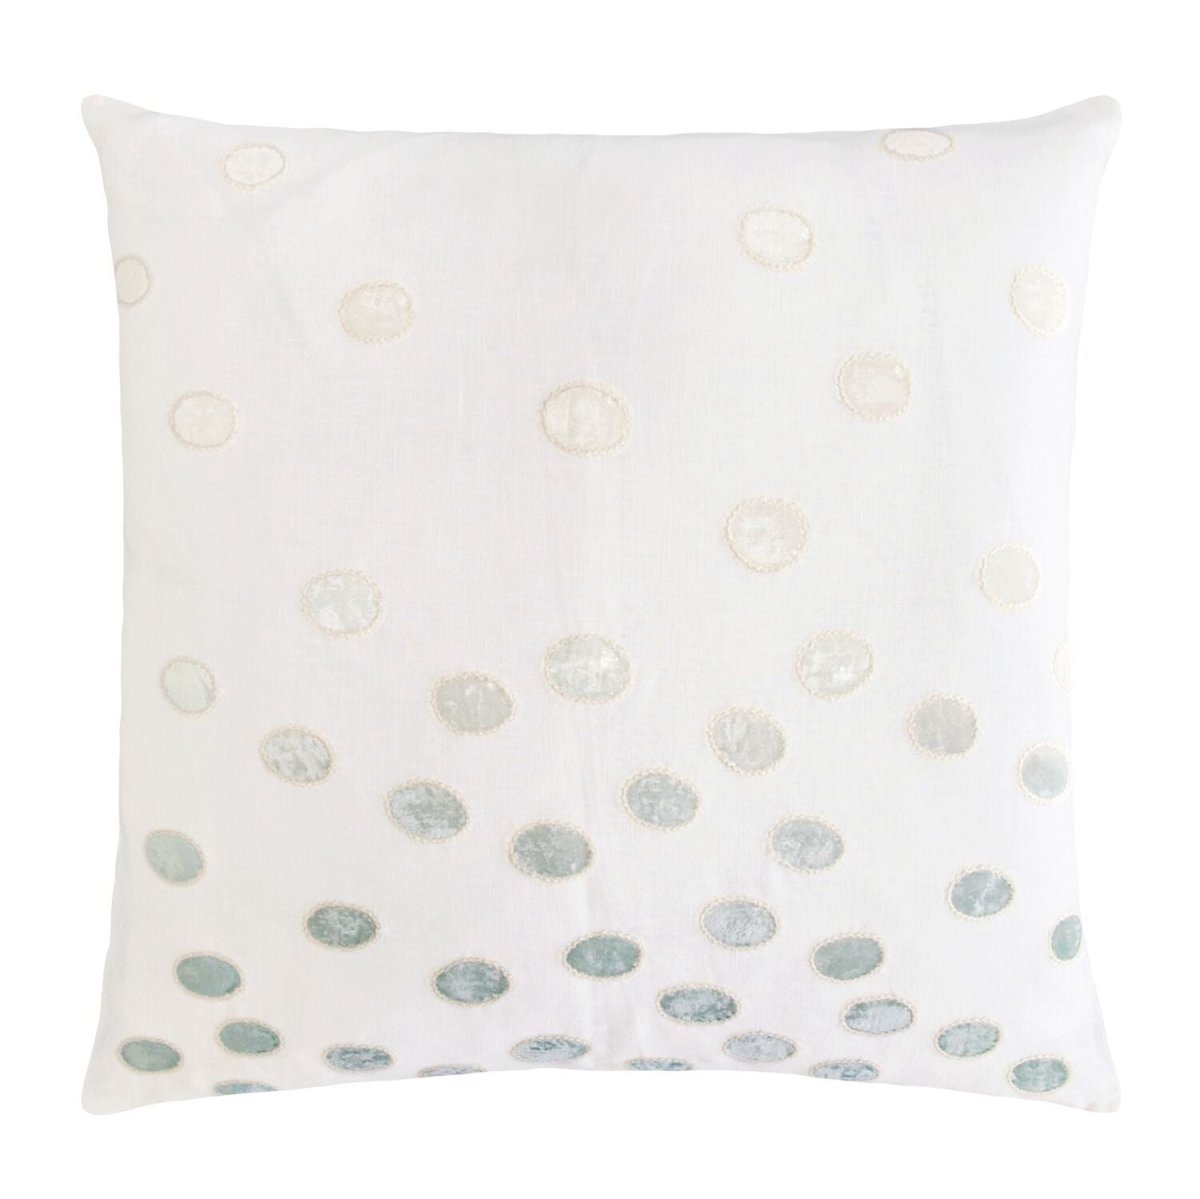 Fig Linens - Sage & White Ovals Velvet Appliqué Square Throw Pillow by Kevin O'Brien Studio